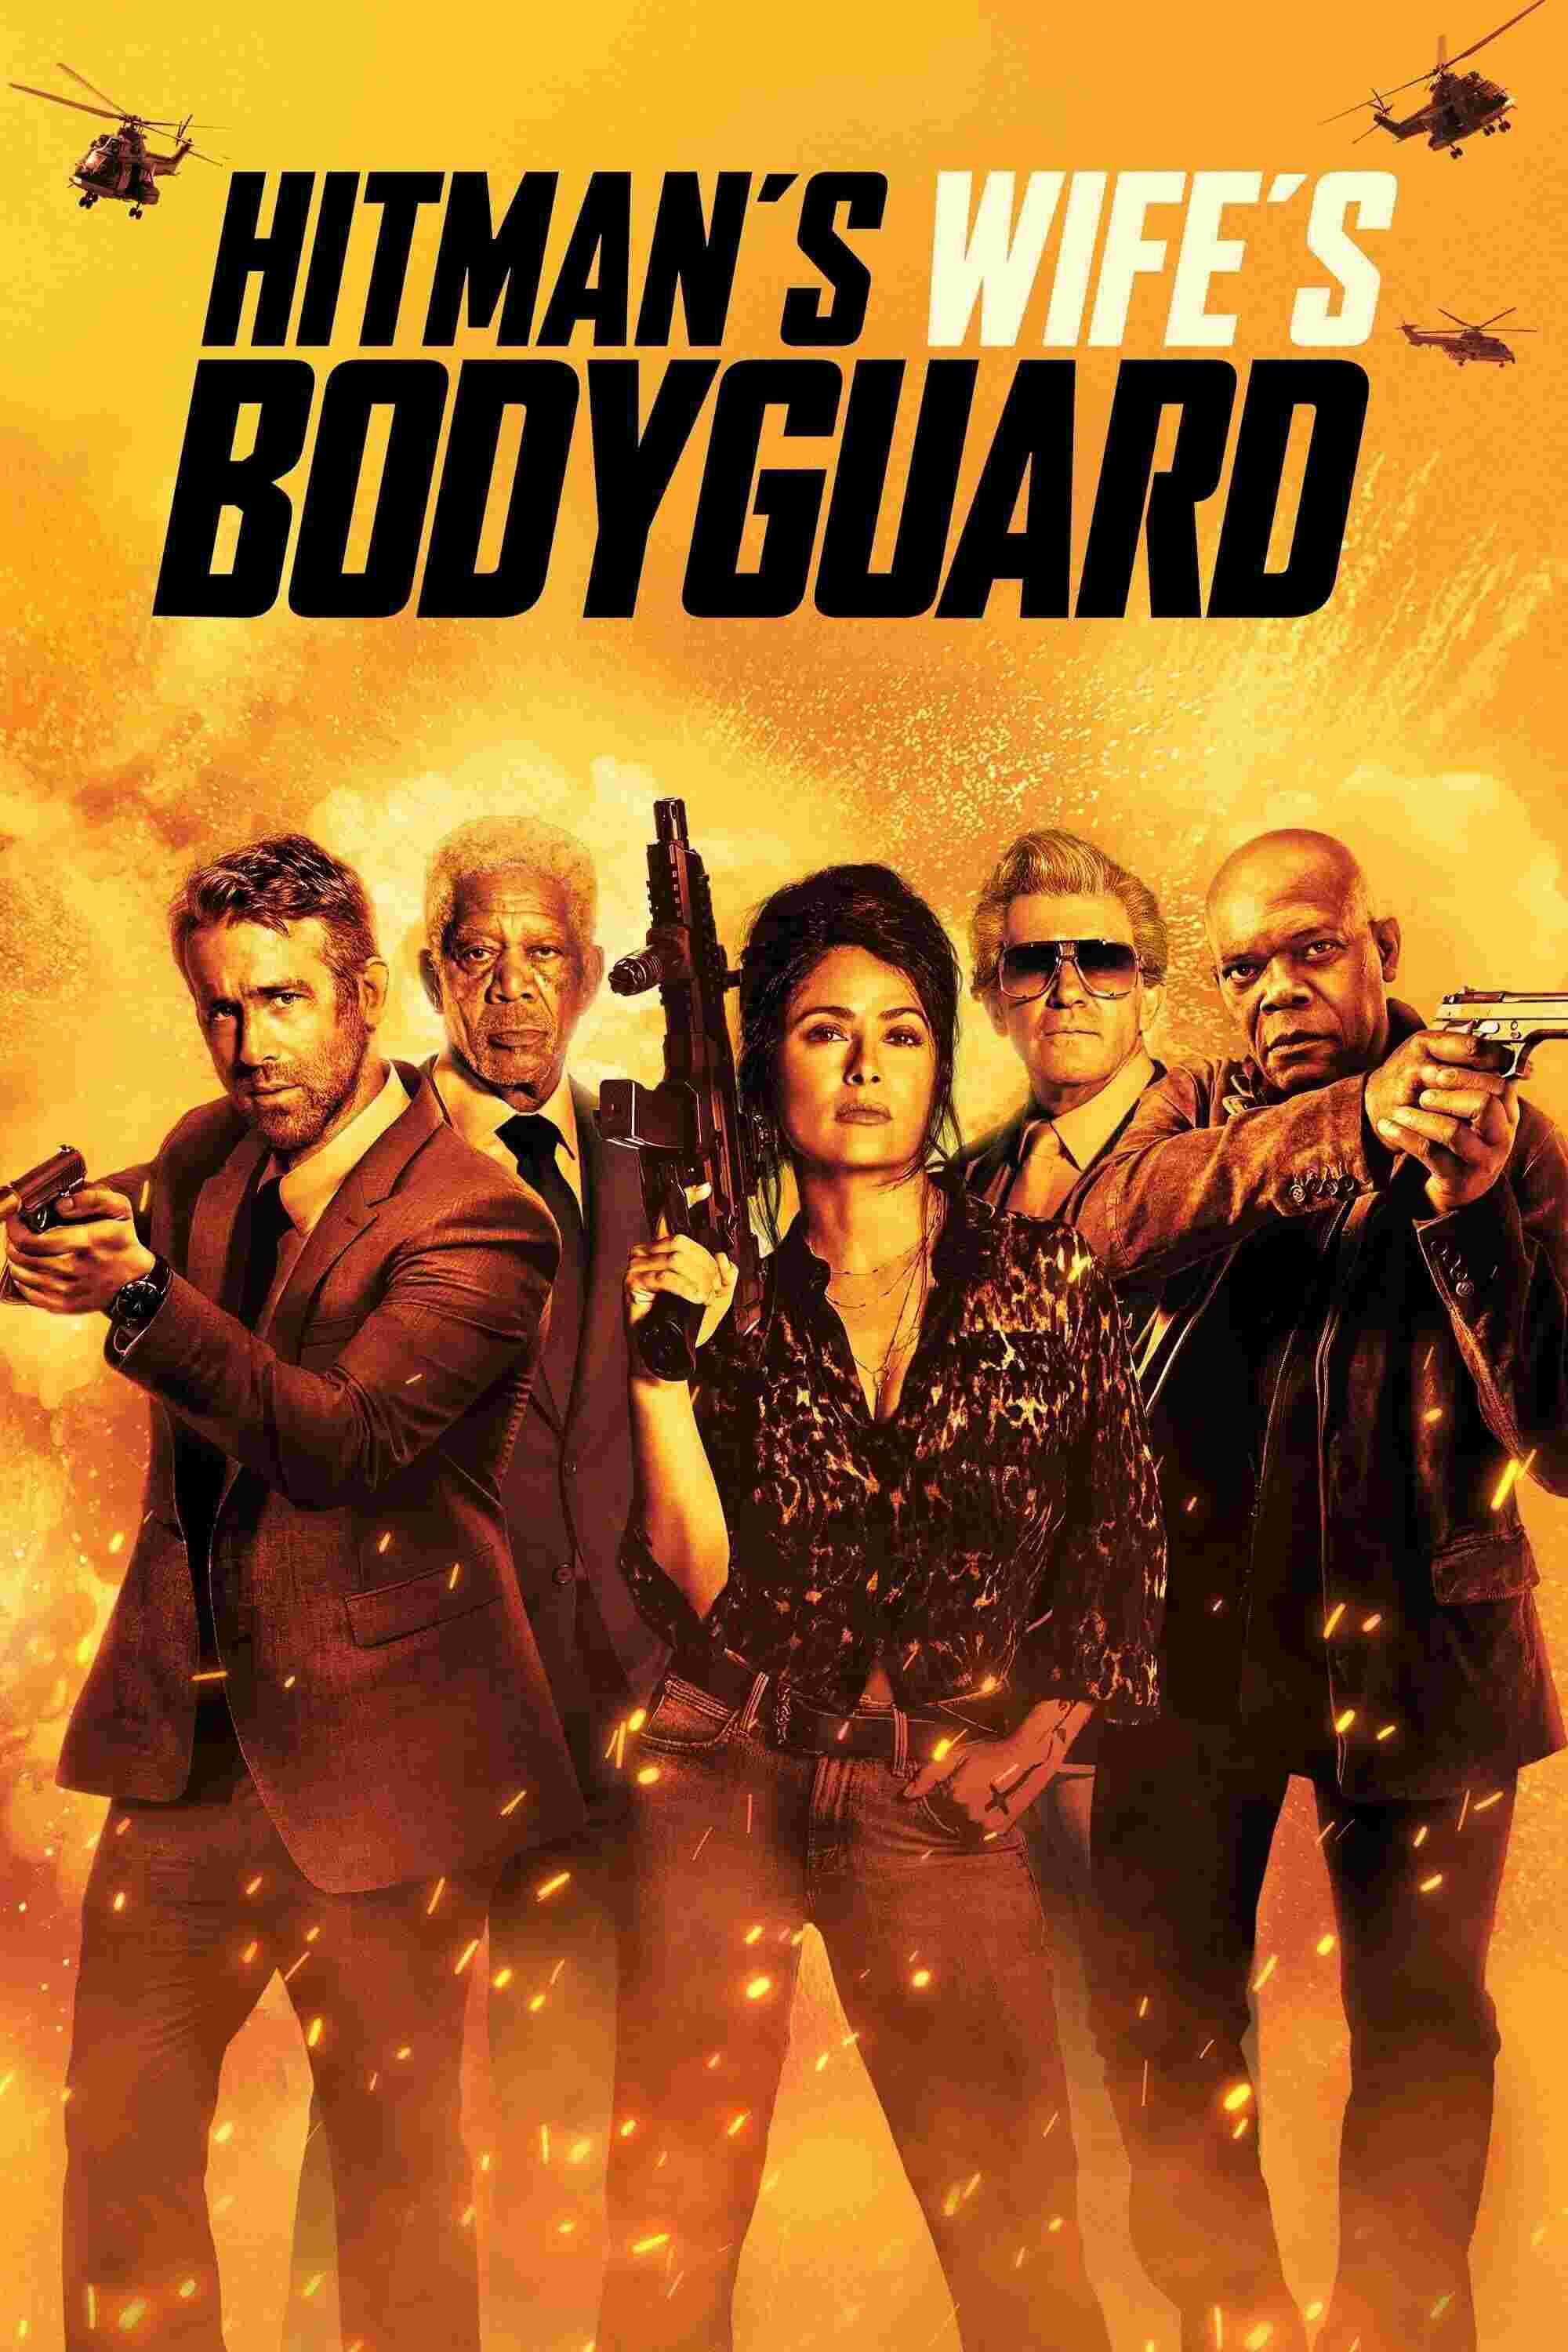 The Hitman's Wife's Bodyguard (2021) Ryan Reynolds